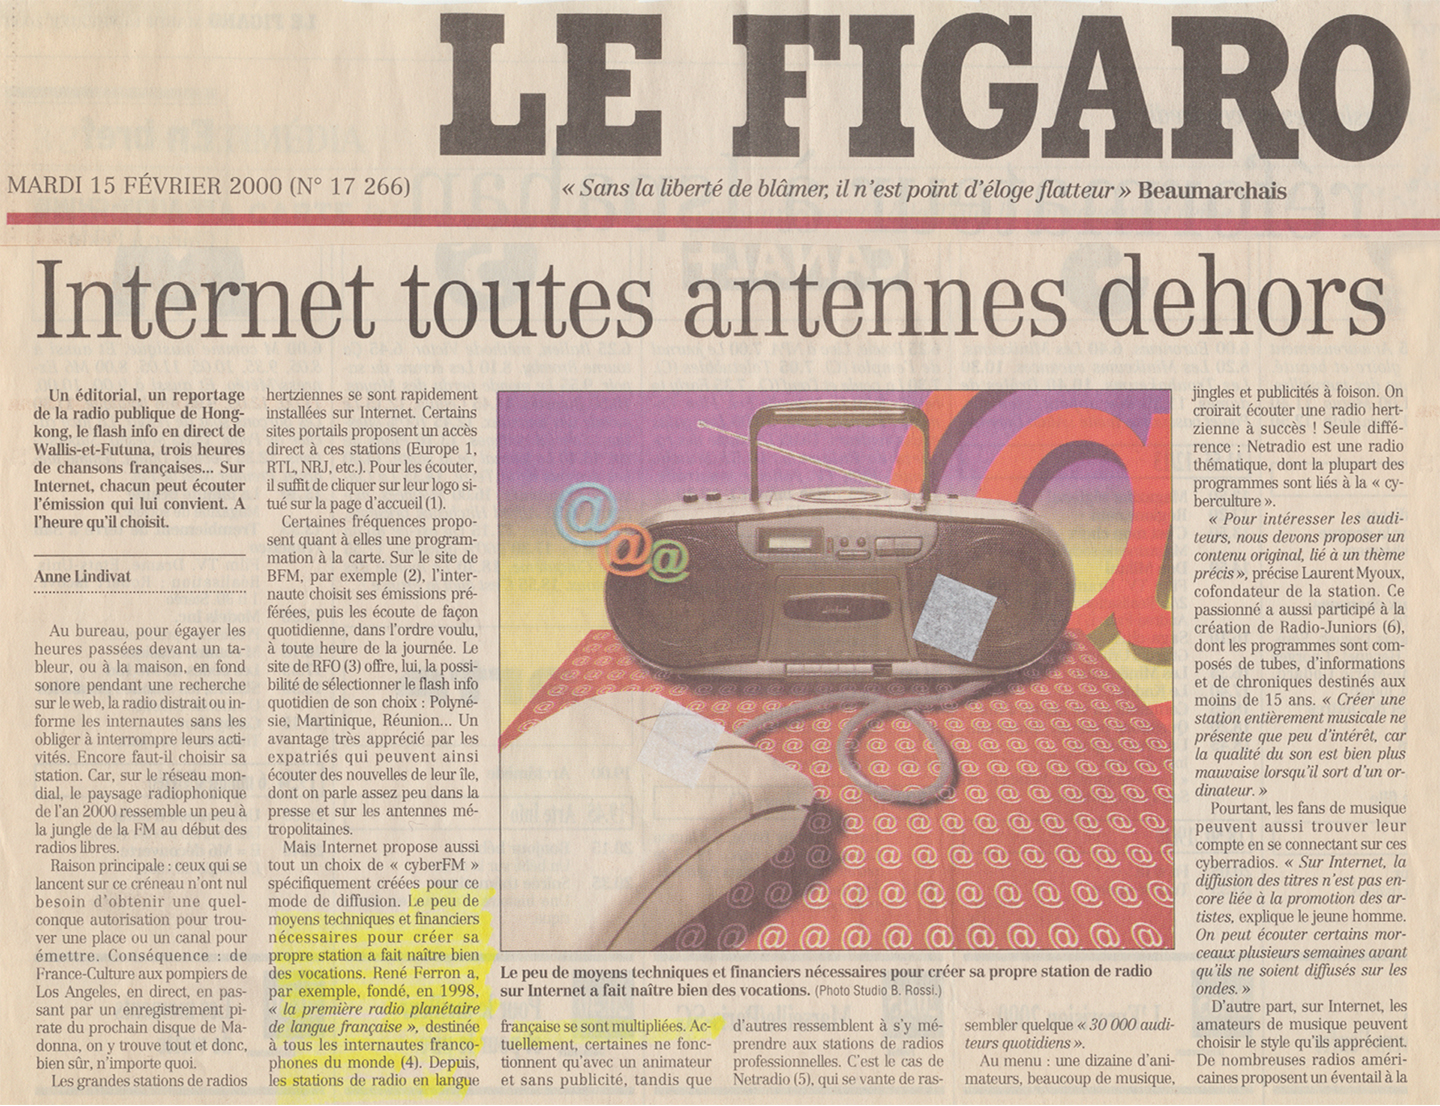 Le Figaro du 15 février 2000. On parle de Radio Monde.